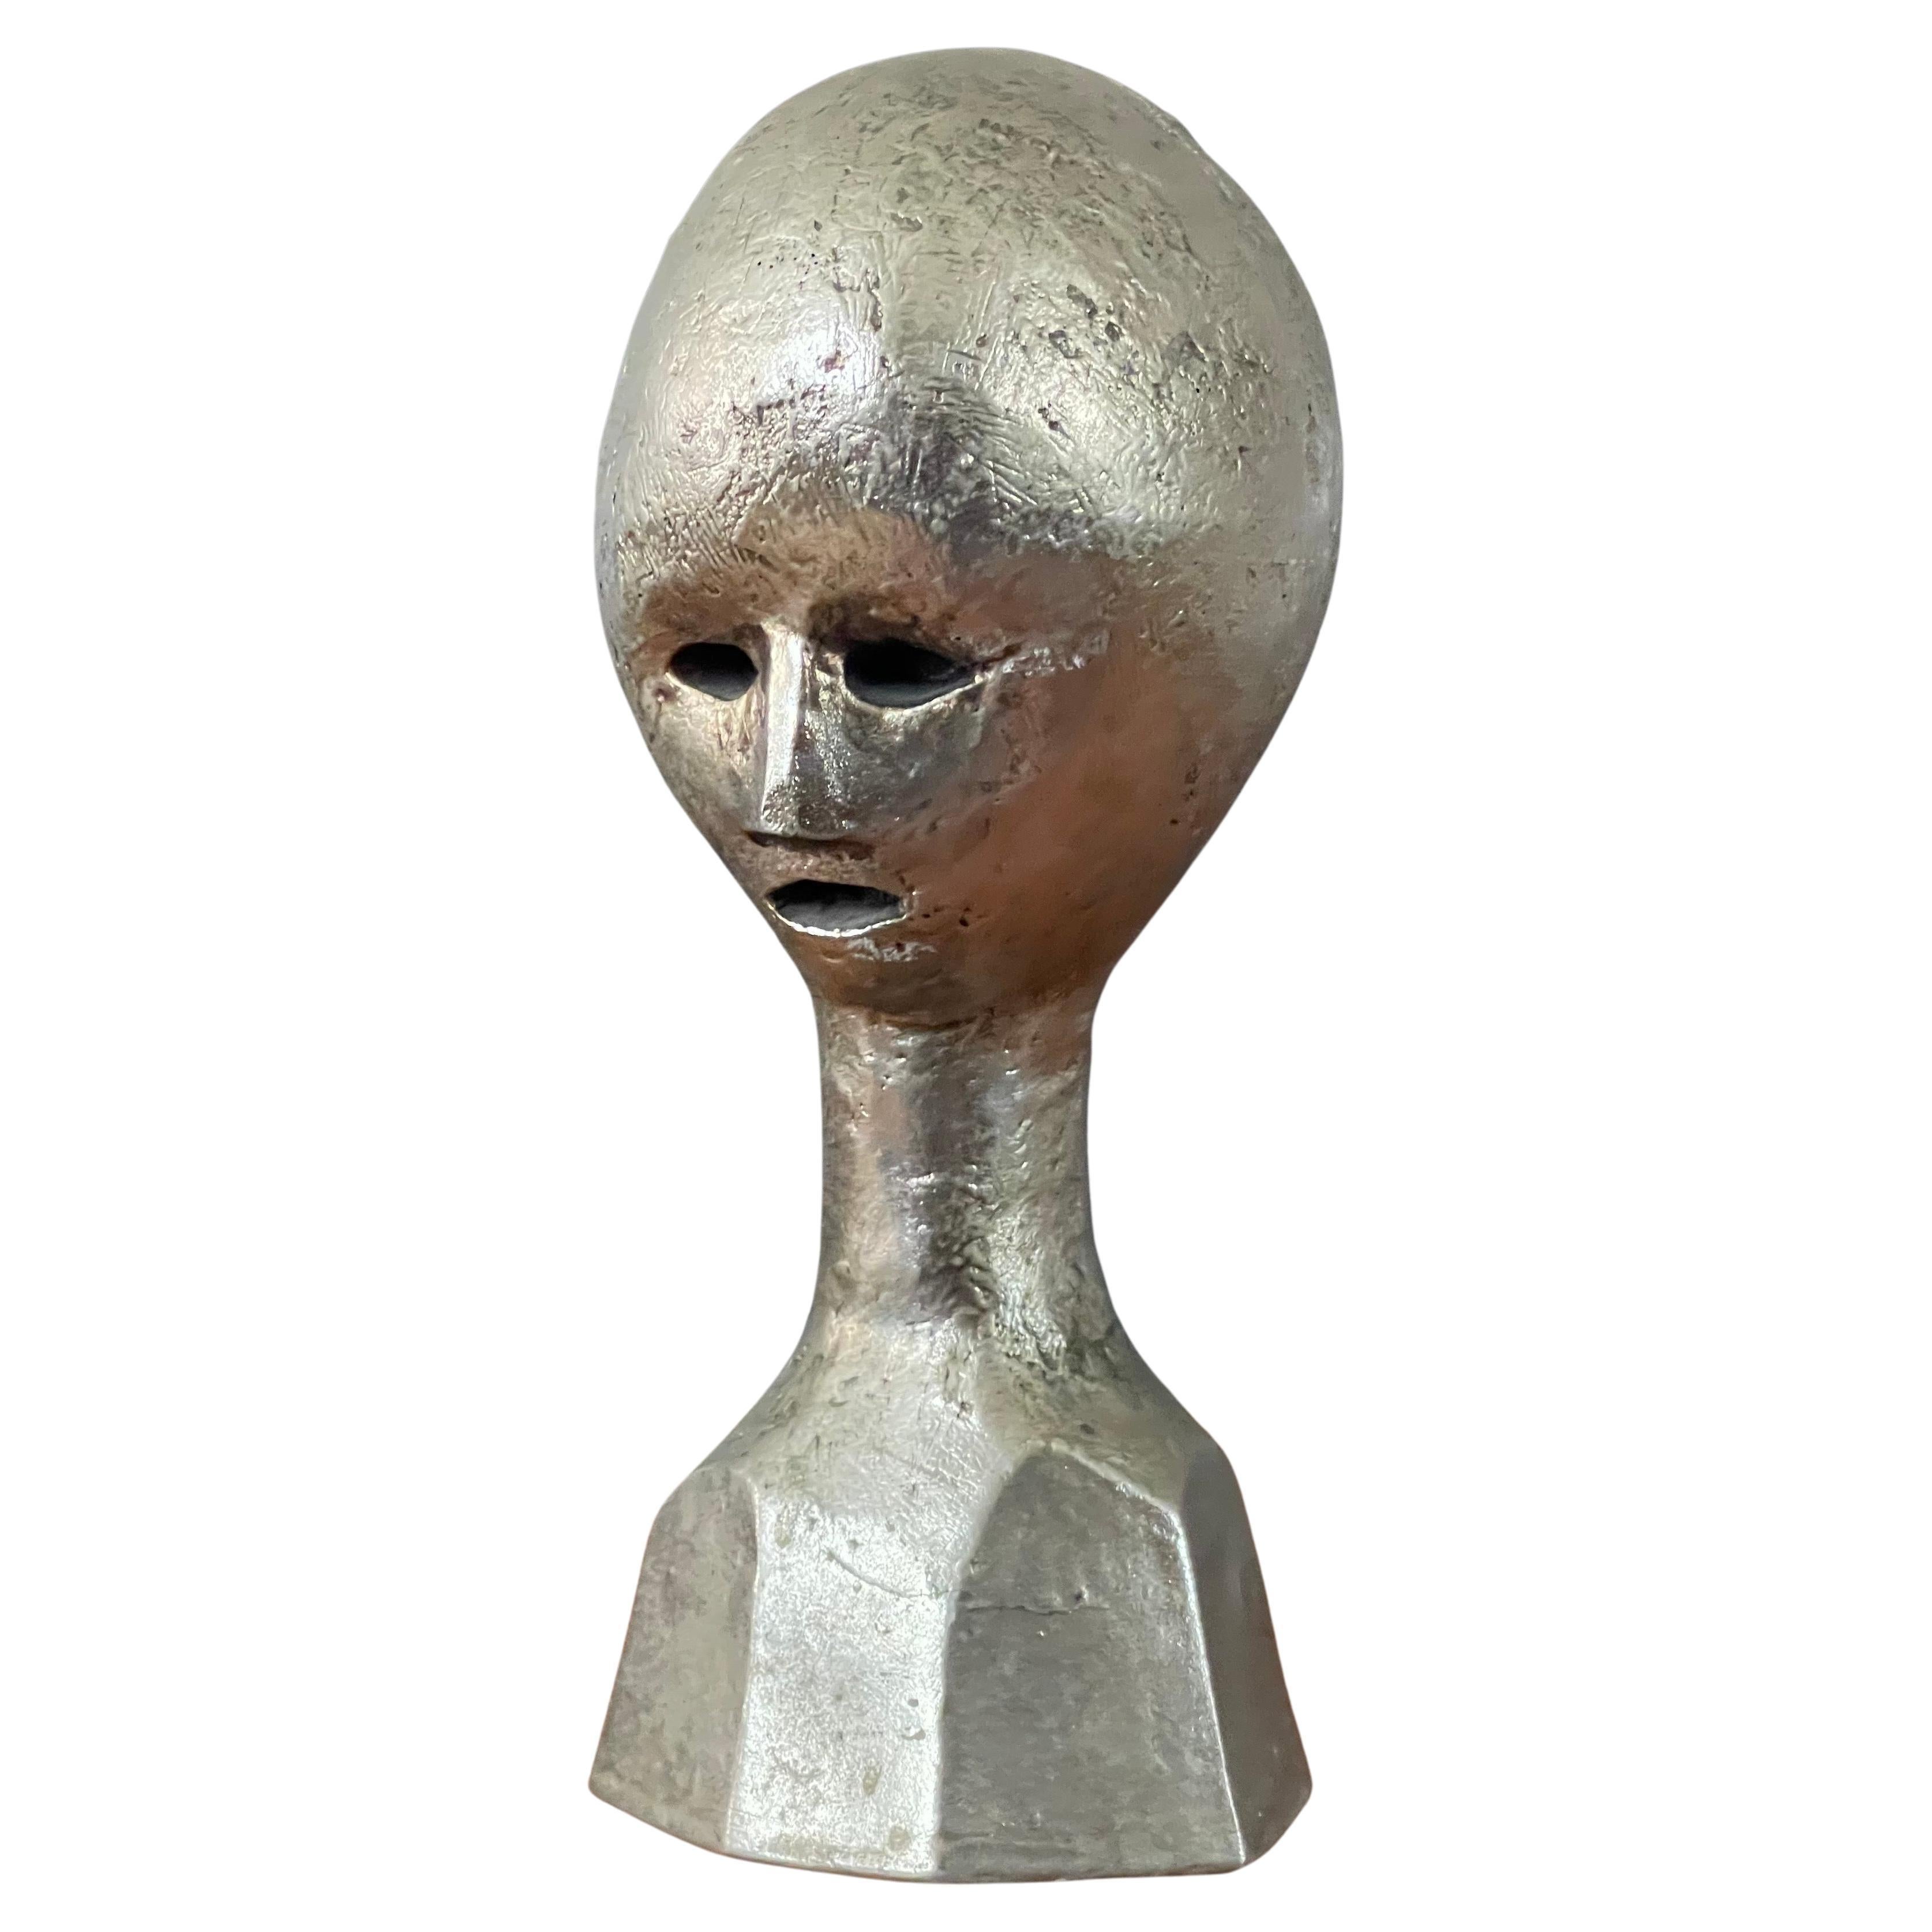 MCM Modernist Alien Bust / Head Sculpture by Andre Minaux For Sale